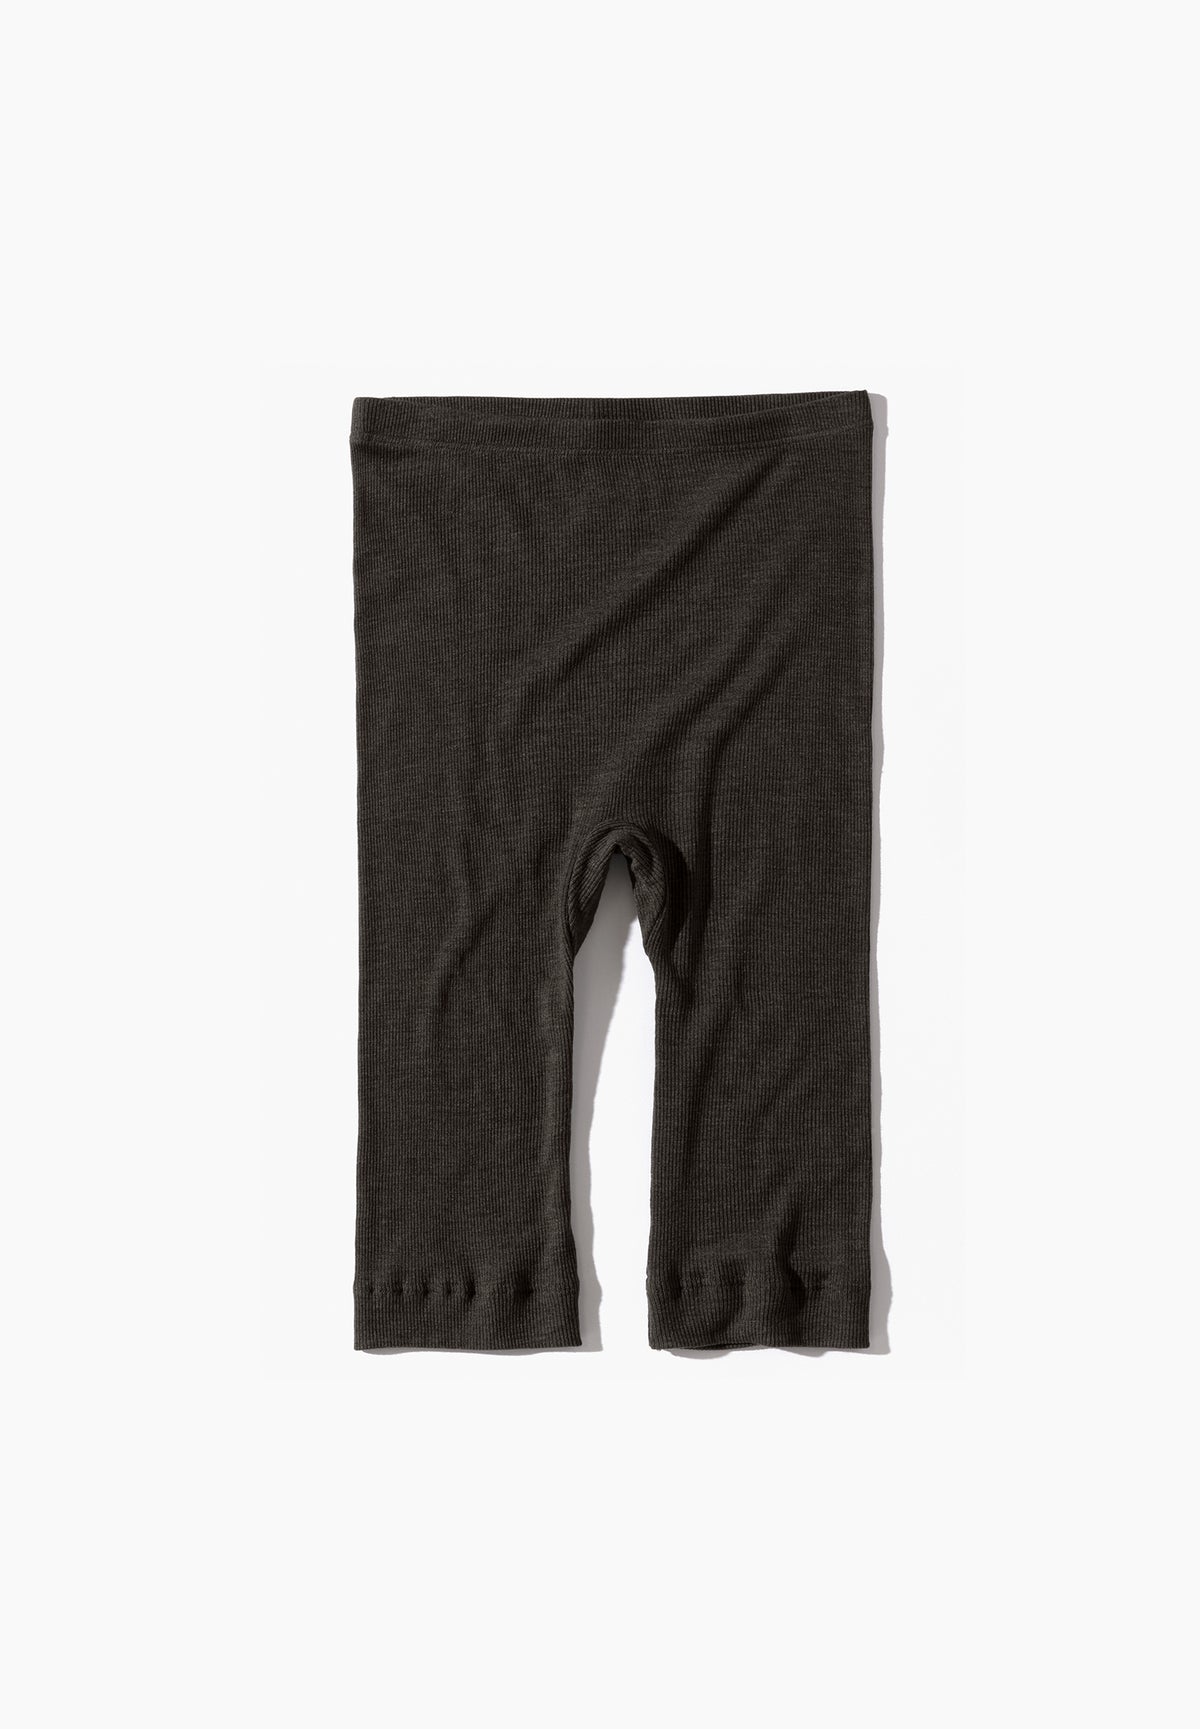 Wool &amp; Silk | Shorts - black olive